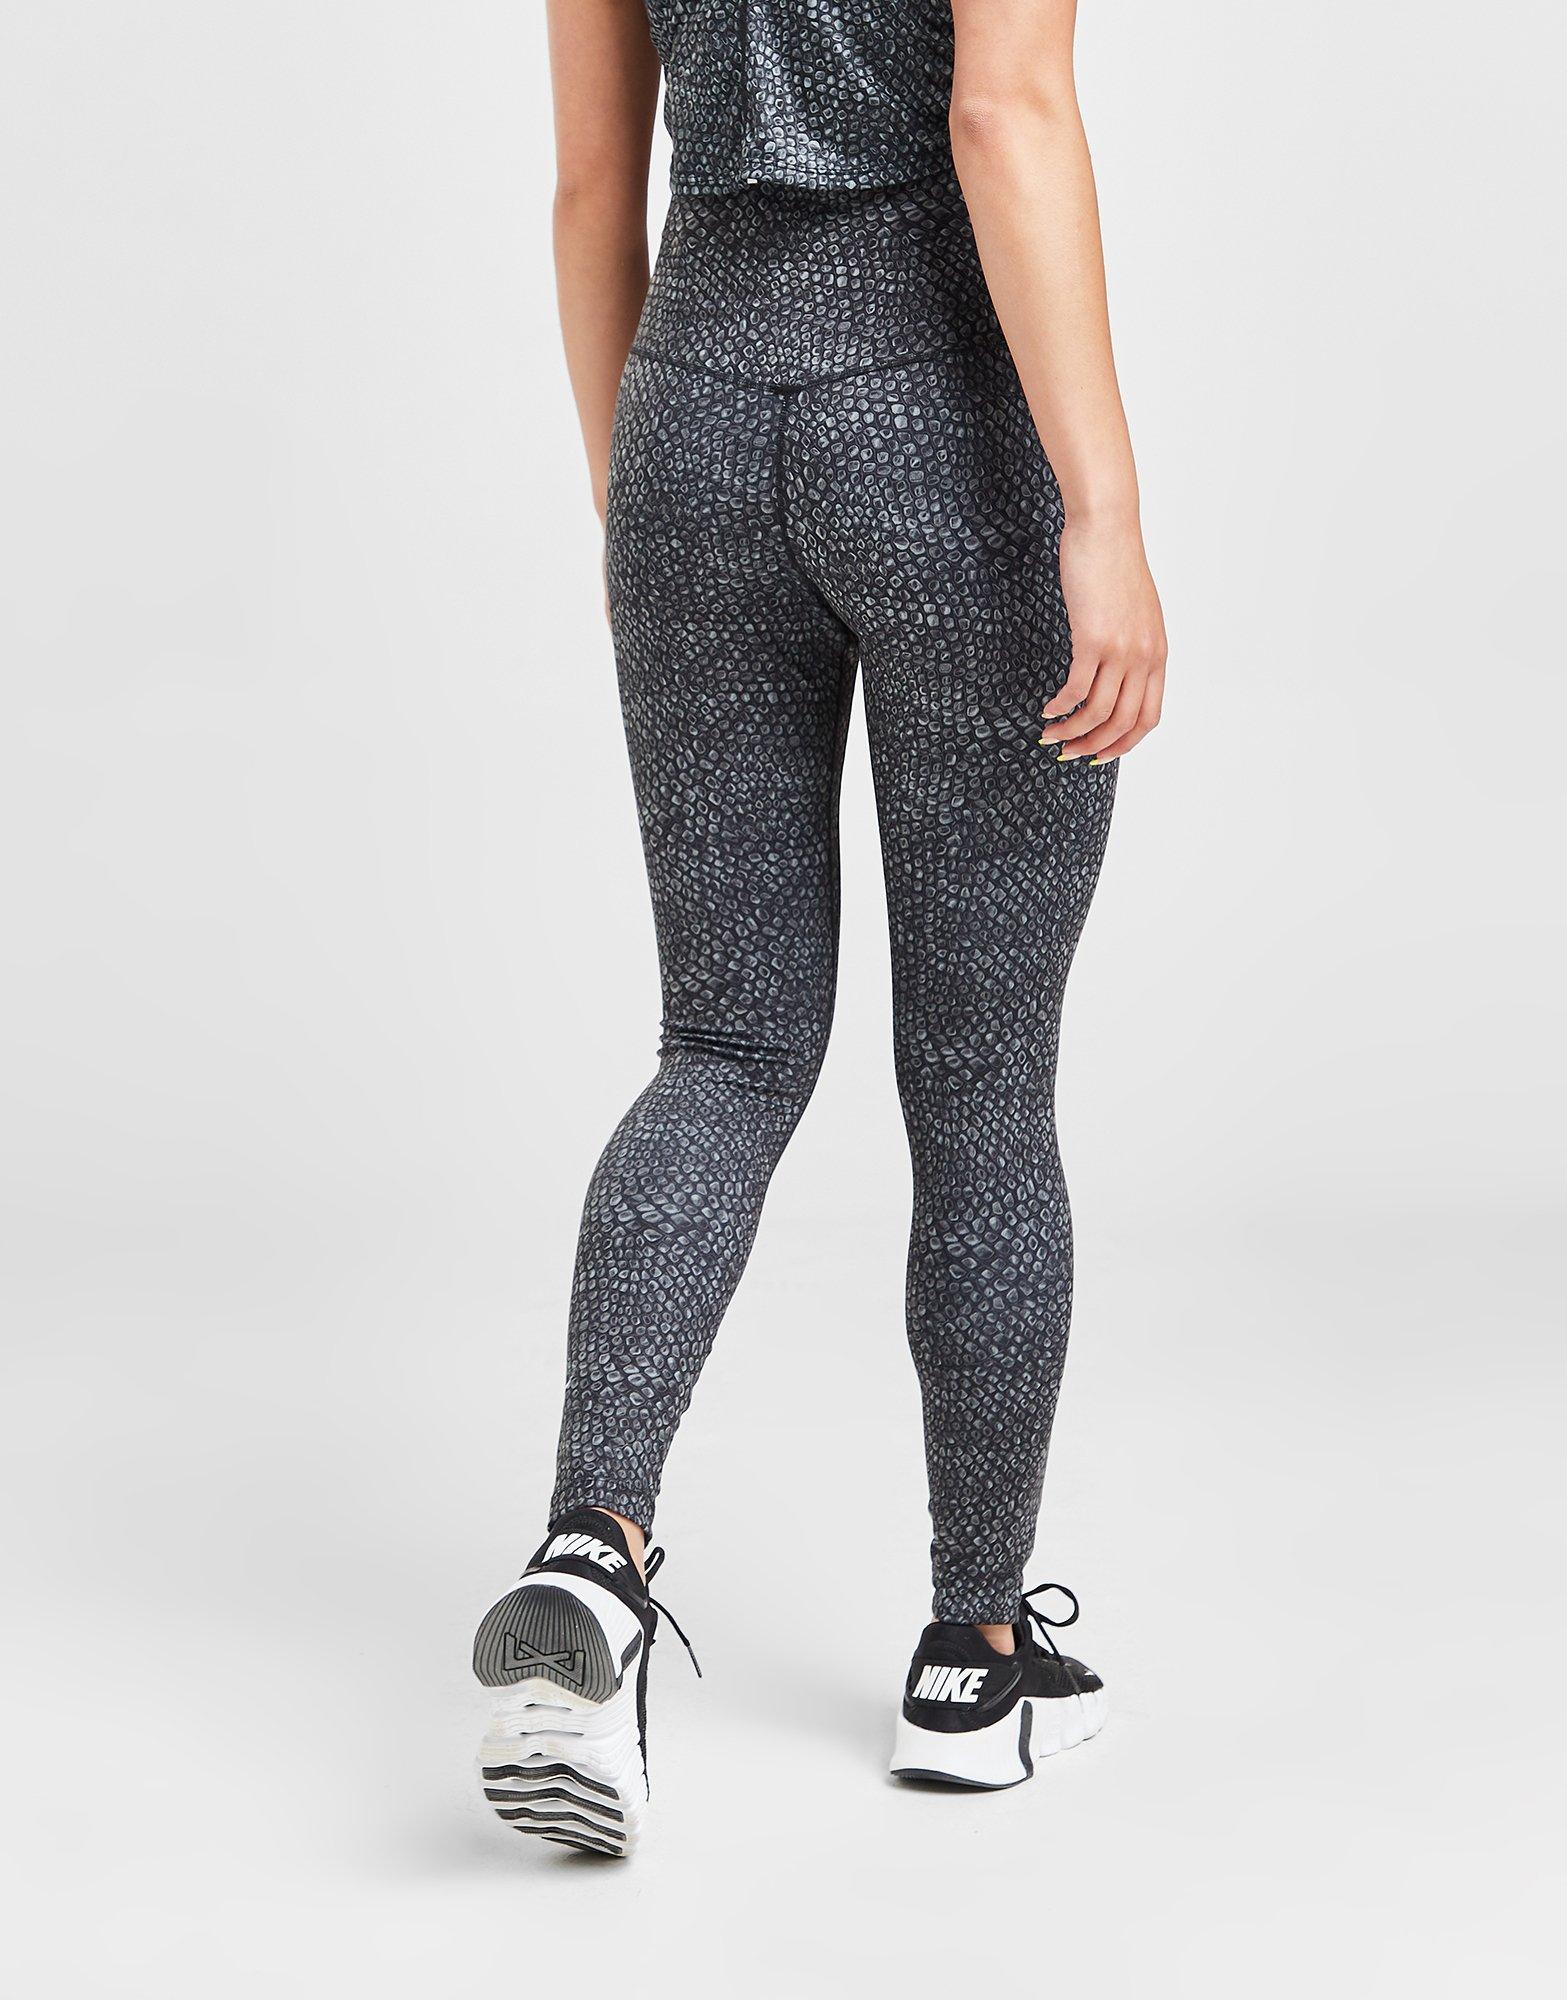 Nike Polka Dots Black Leggings Size 2X (Plus) - 54% off